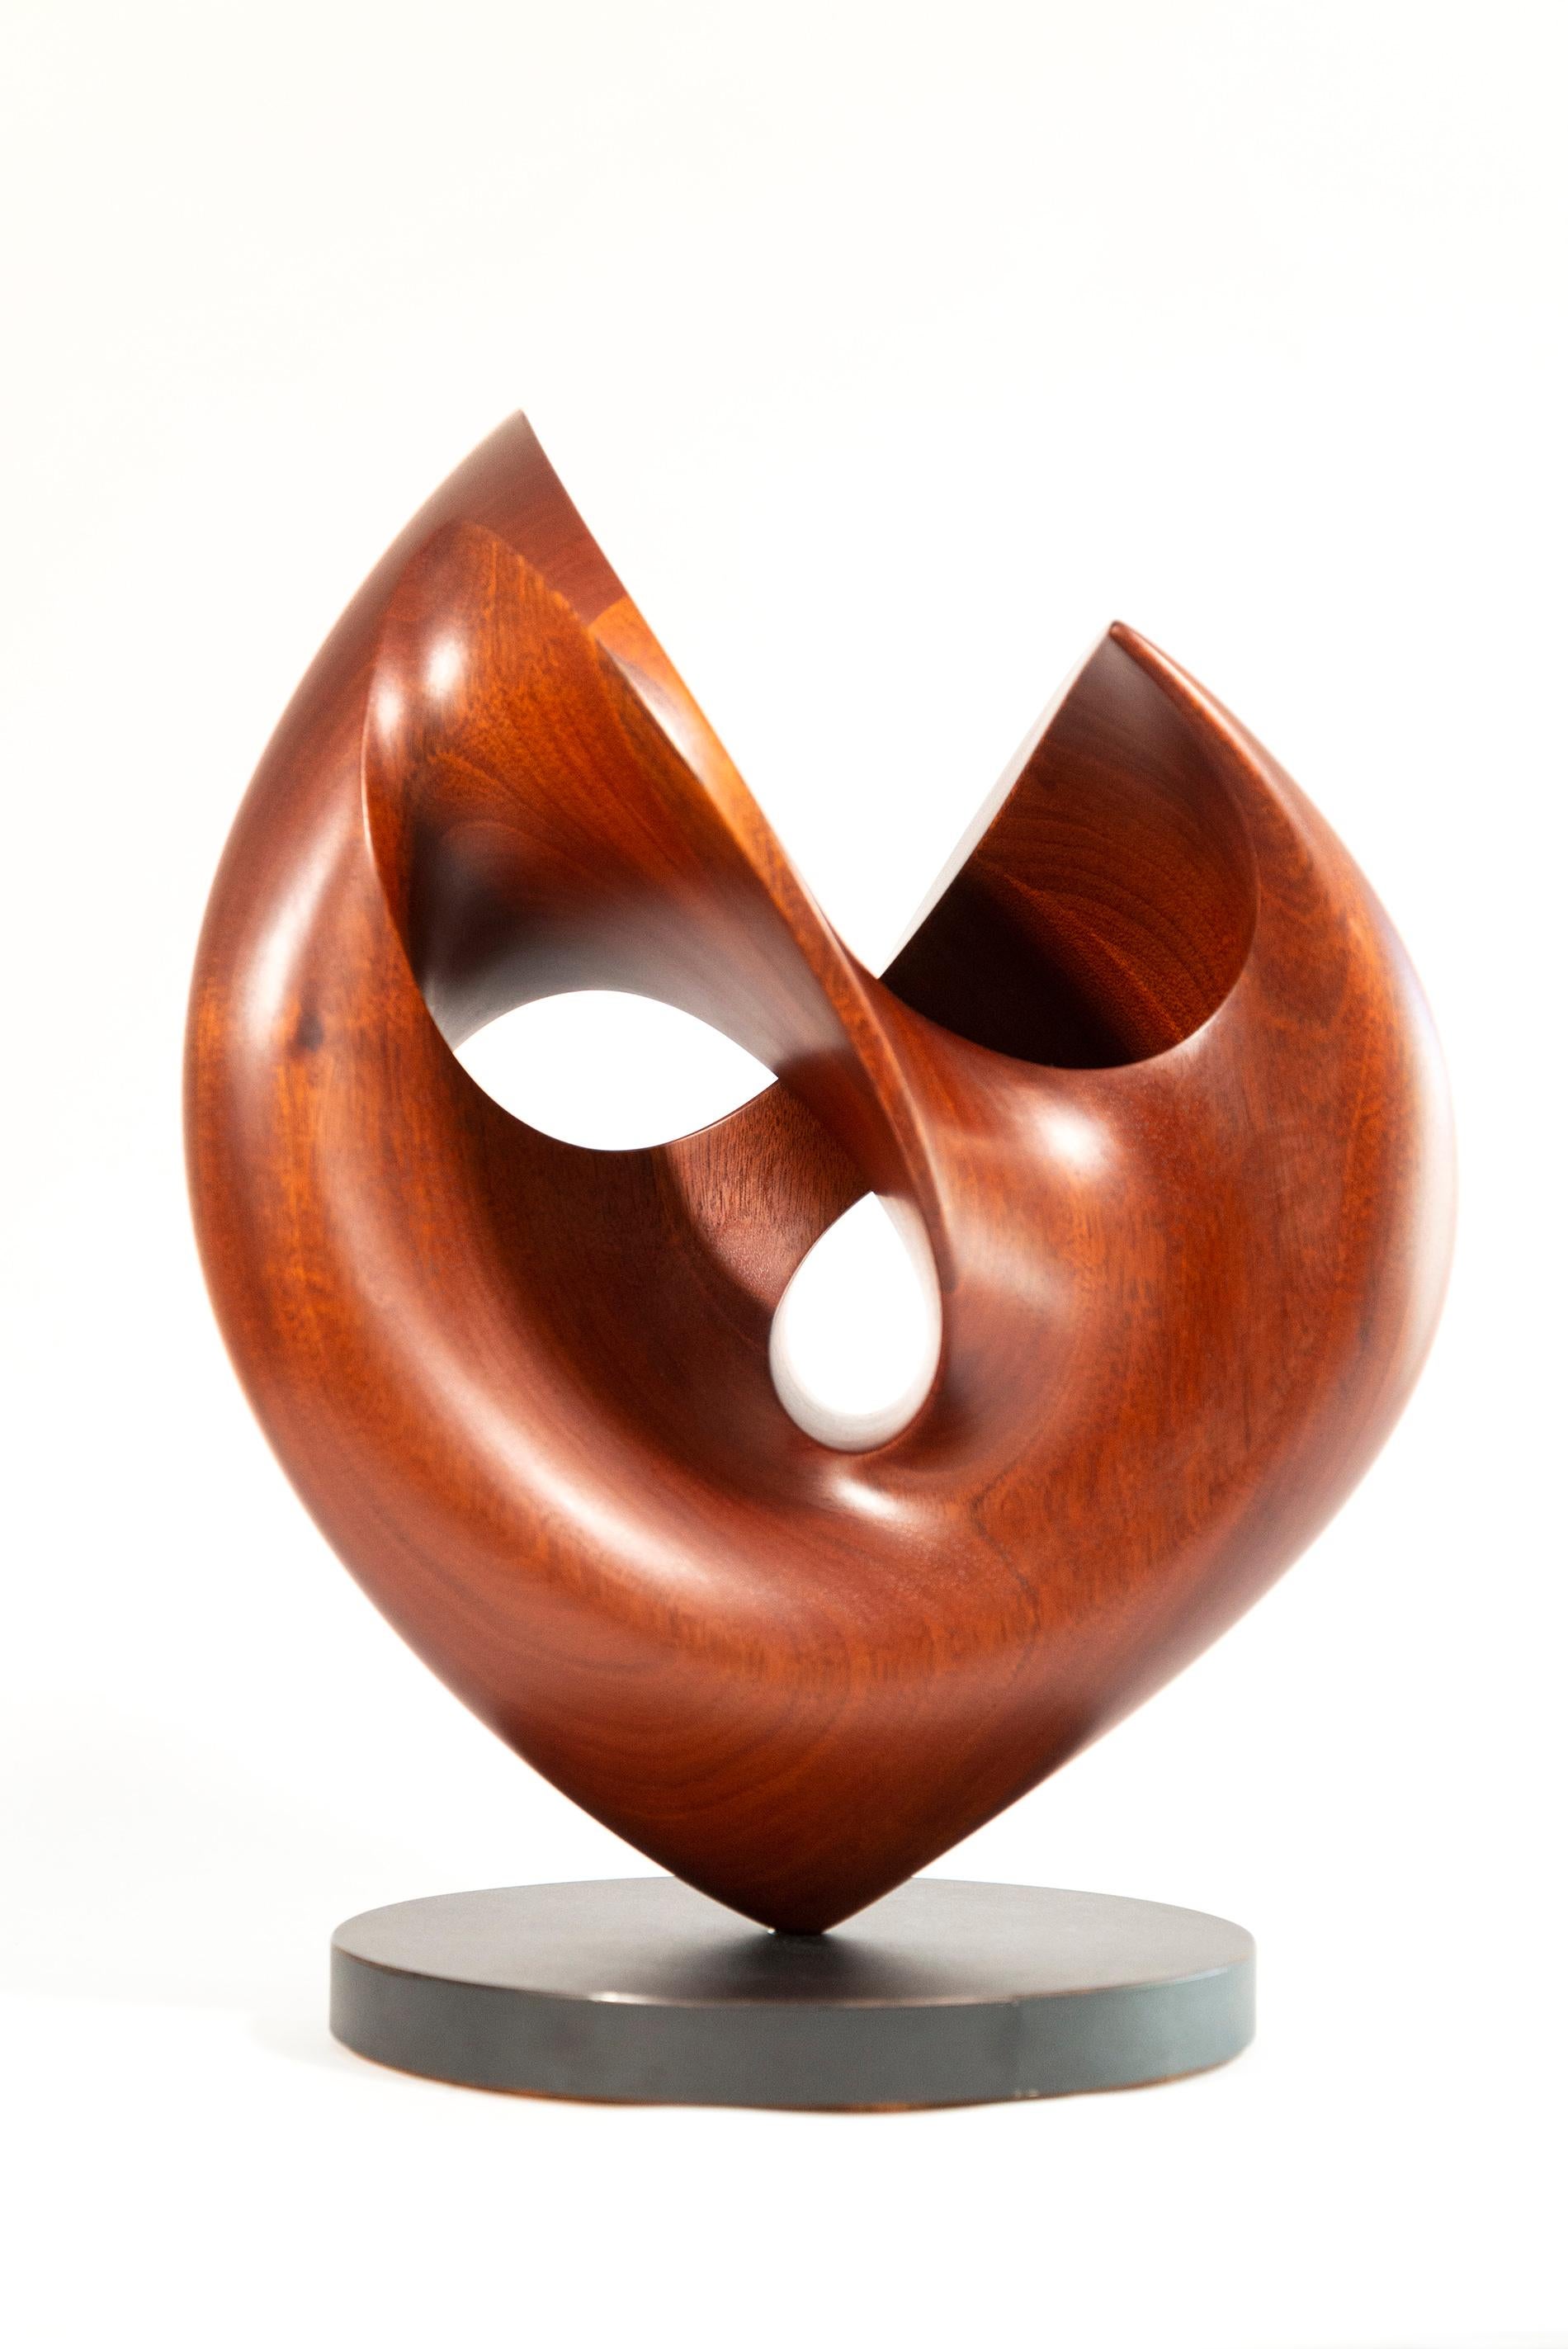 Senza Misura - smooth, polished, abstract, contemporary, mahogany sculpture - Sculpture by David Chamberlain